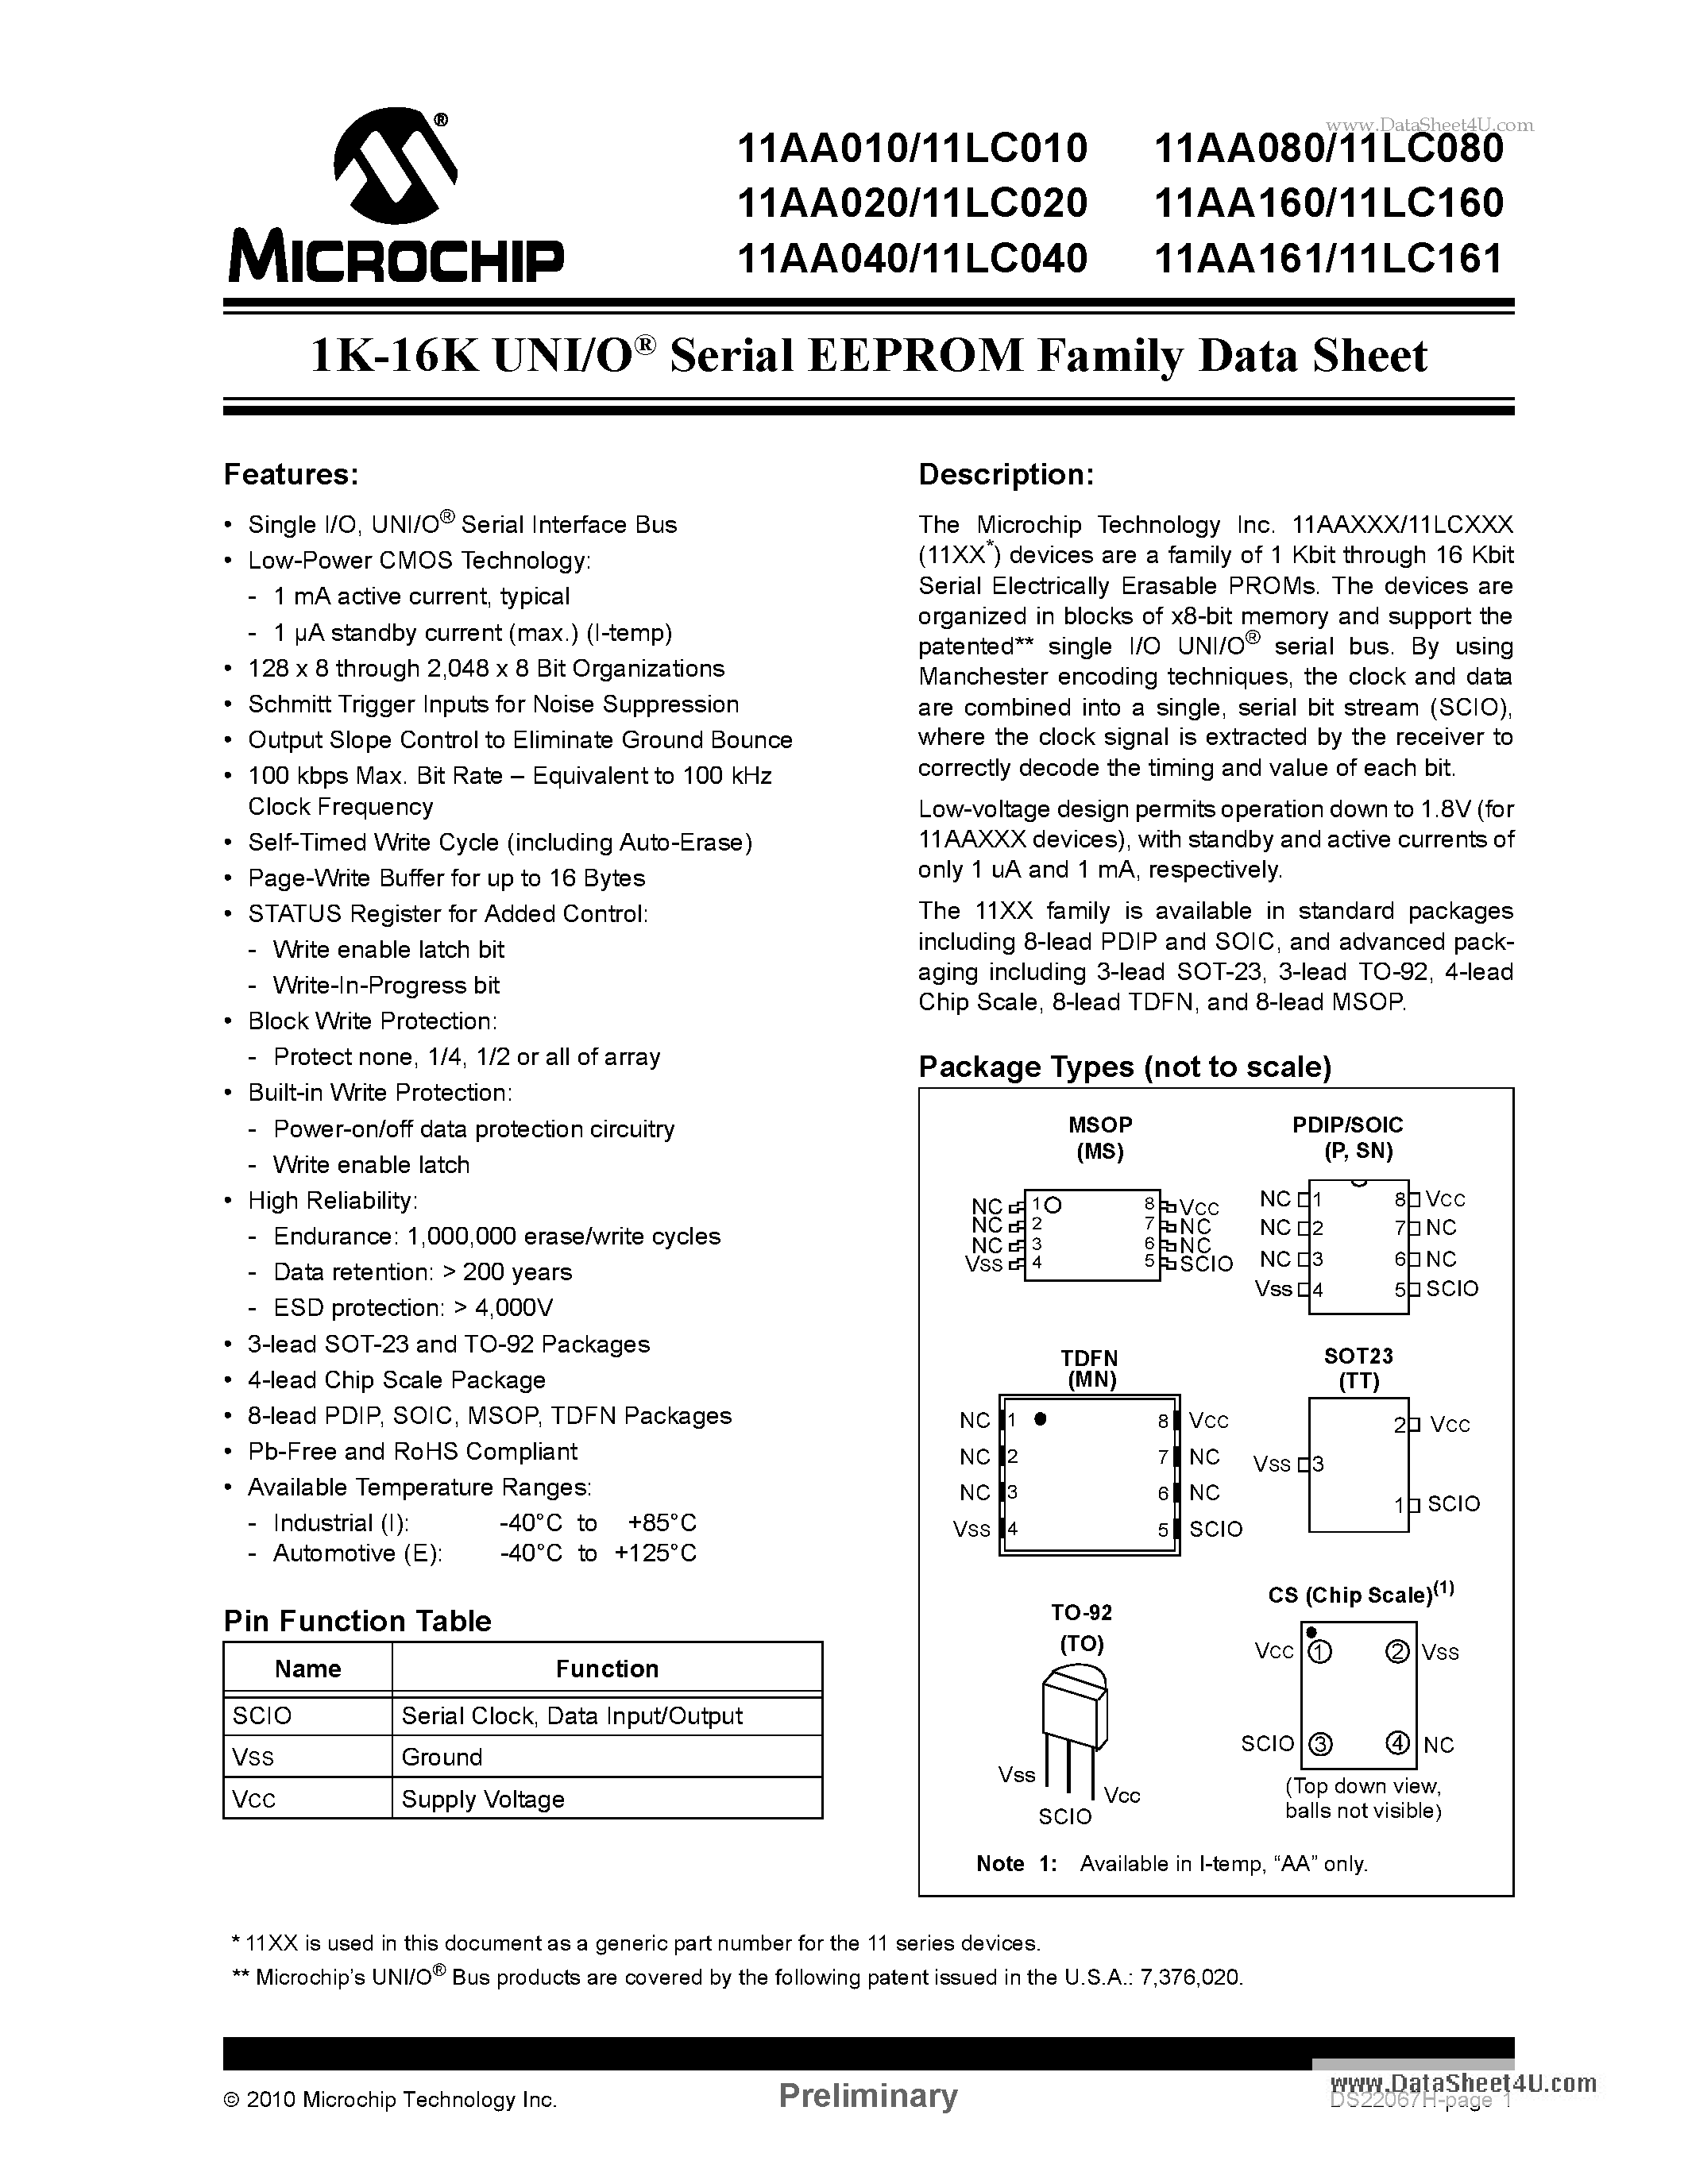 Datasheet 11AA010 - 1K-16K UNI/O Serial EEPROM Family page 1